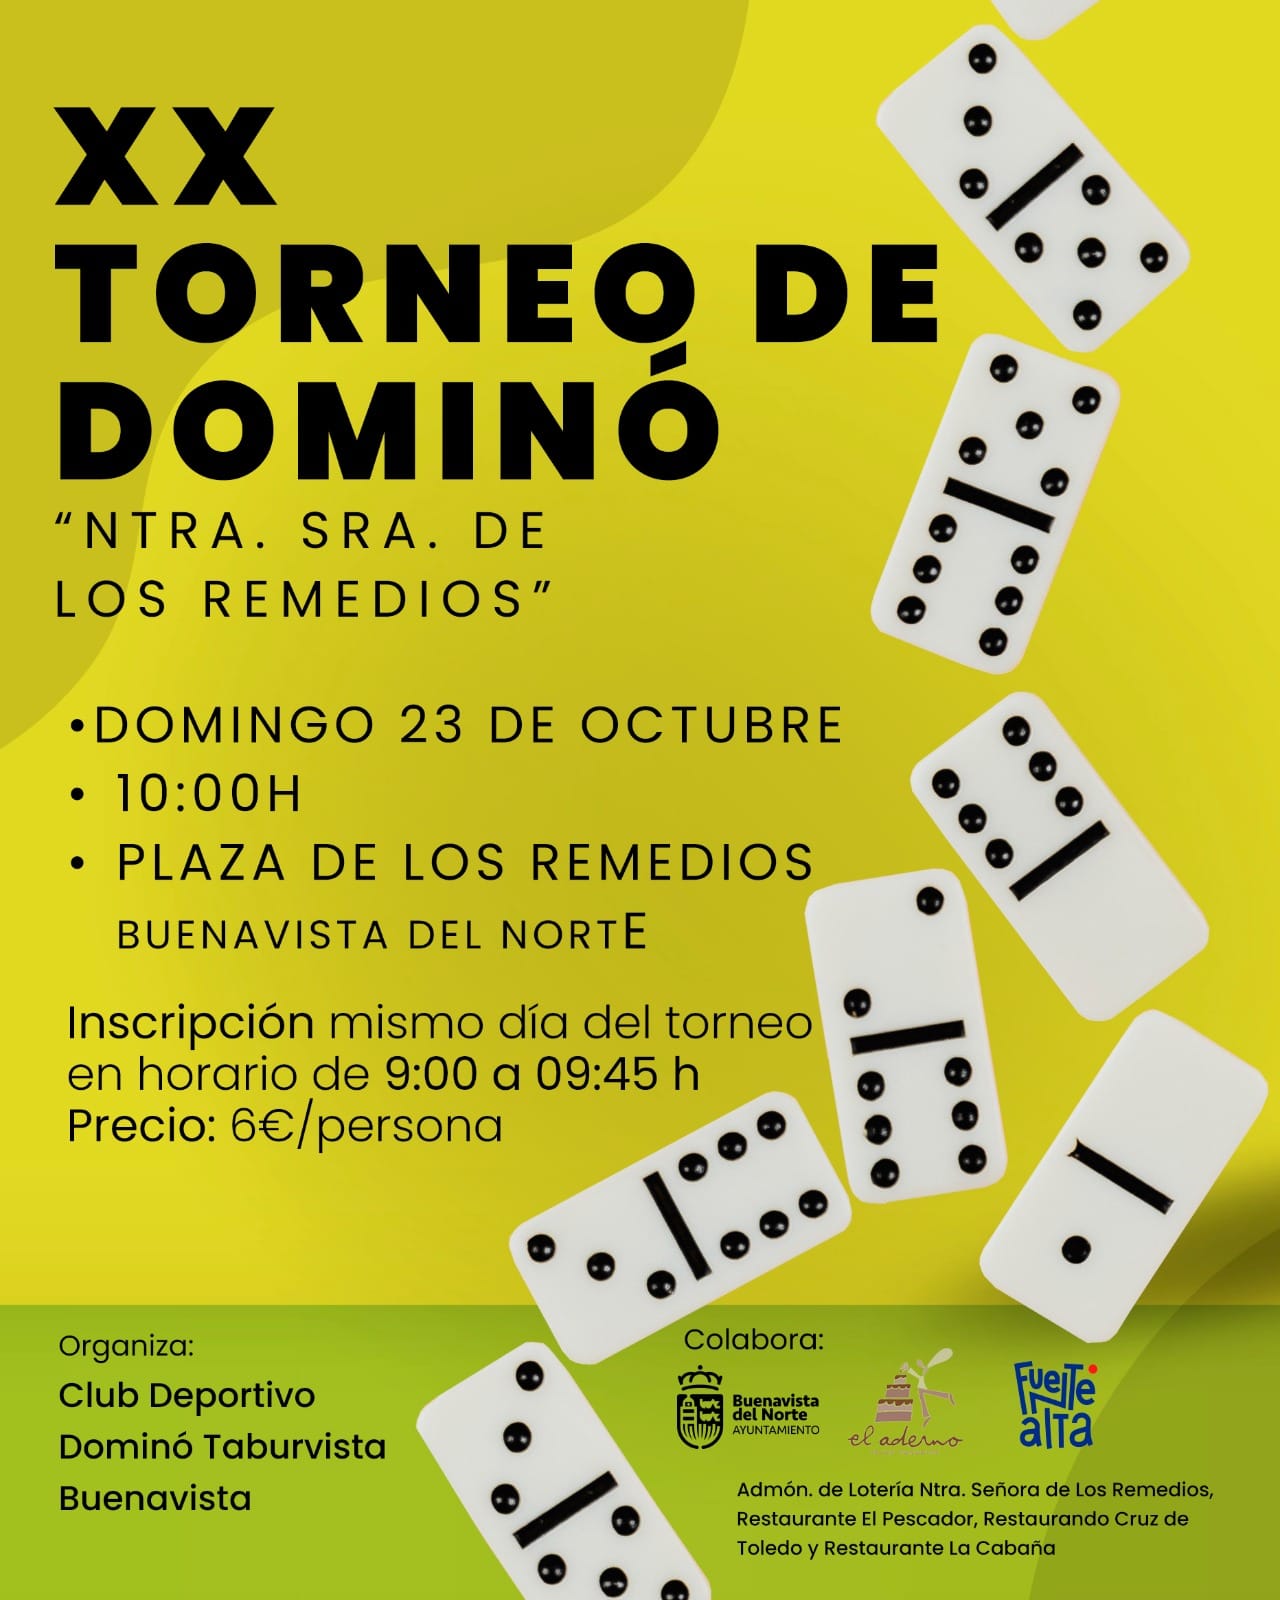 XX Torneo de Dominó "Ntra. Sra. de Los Remedios".